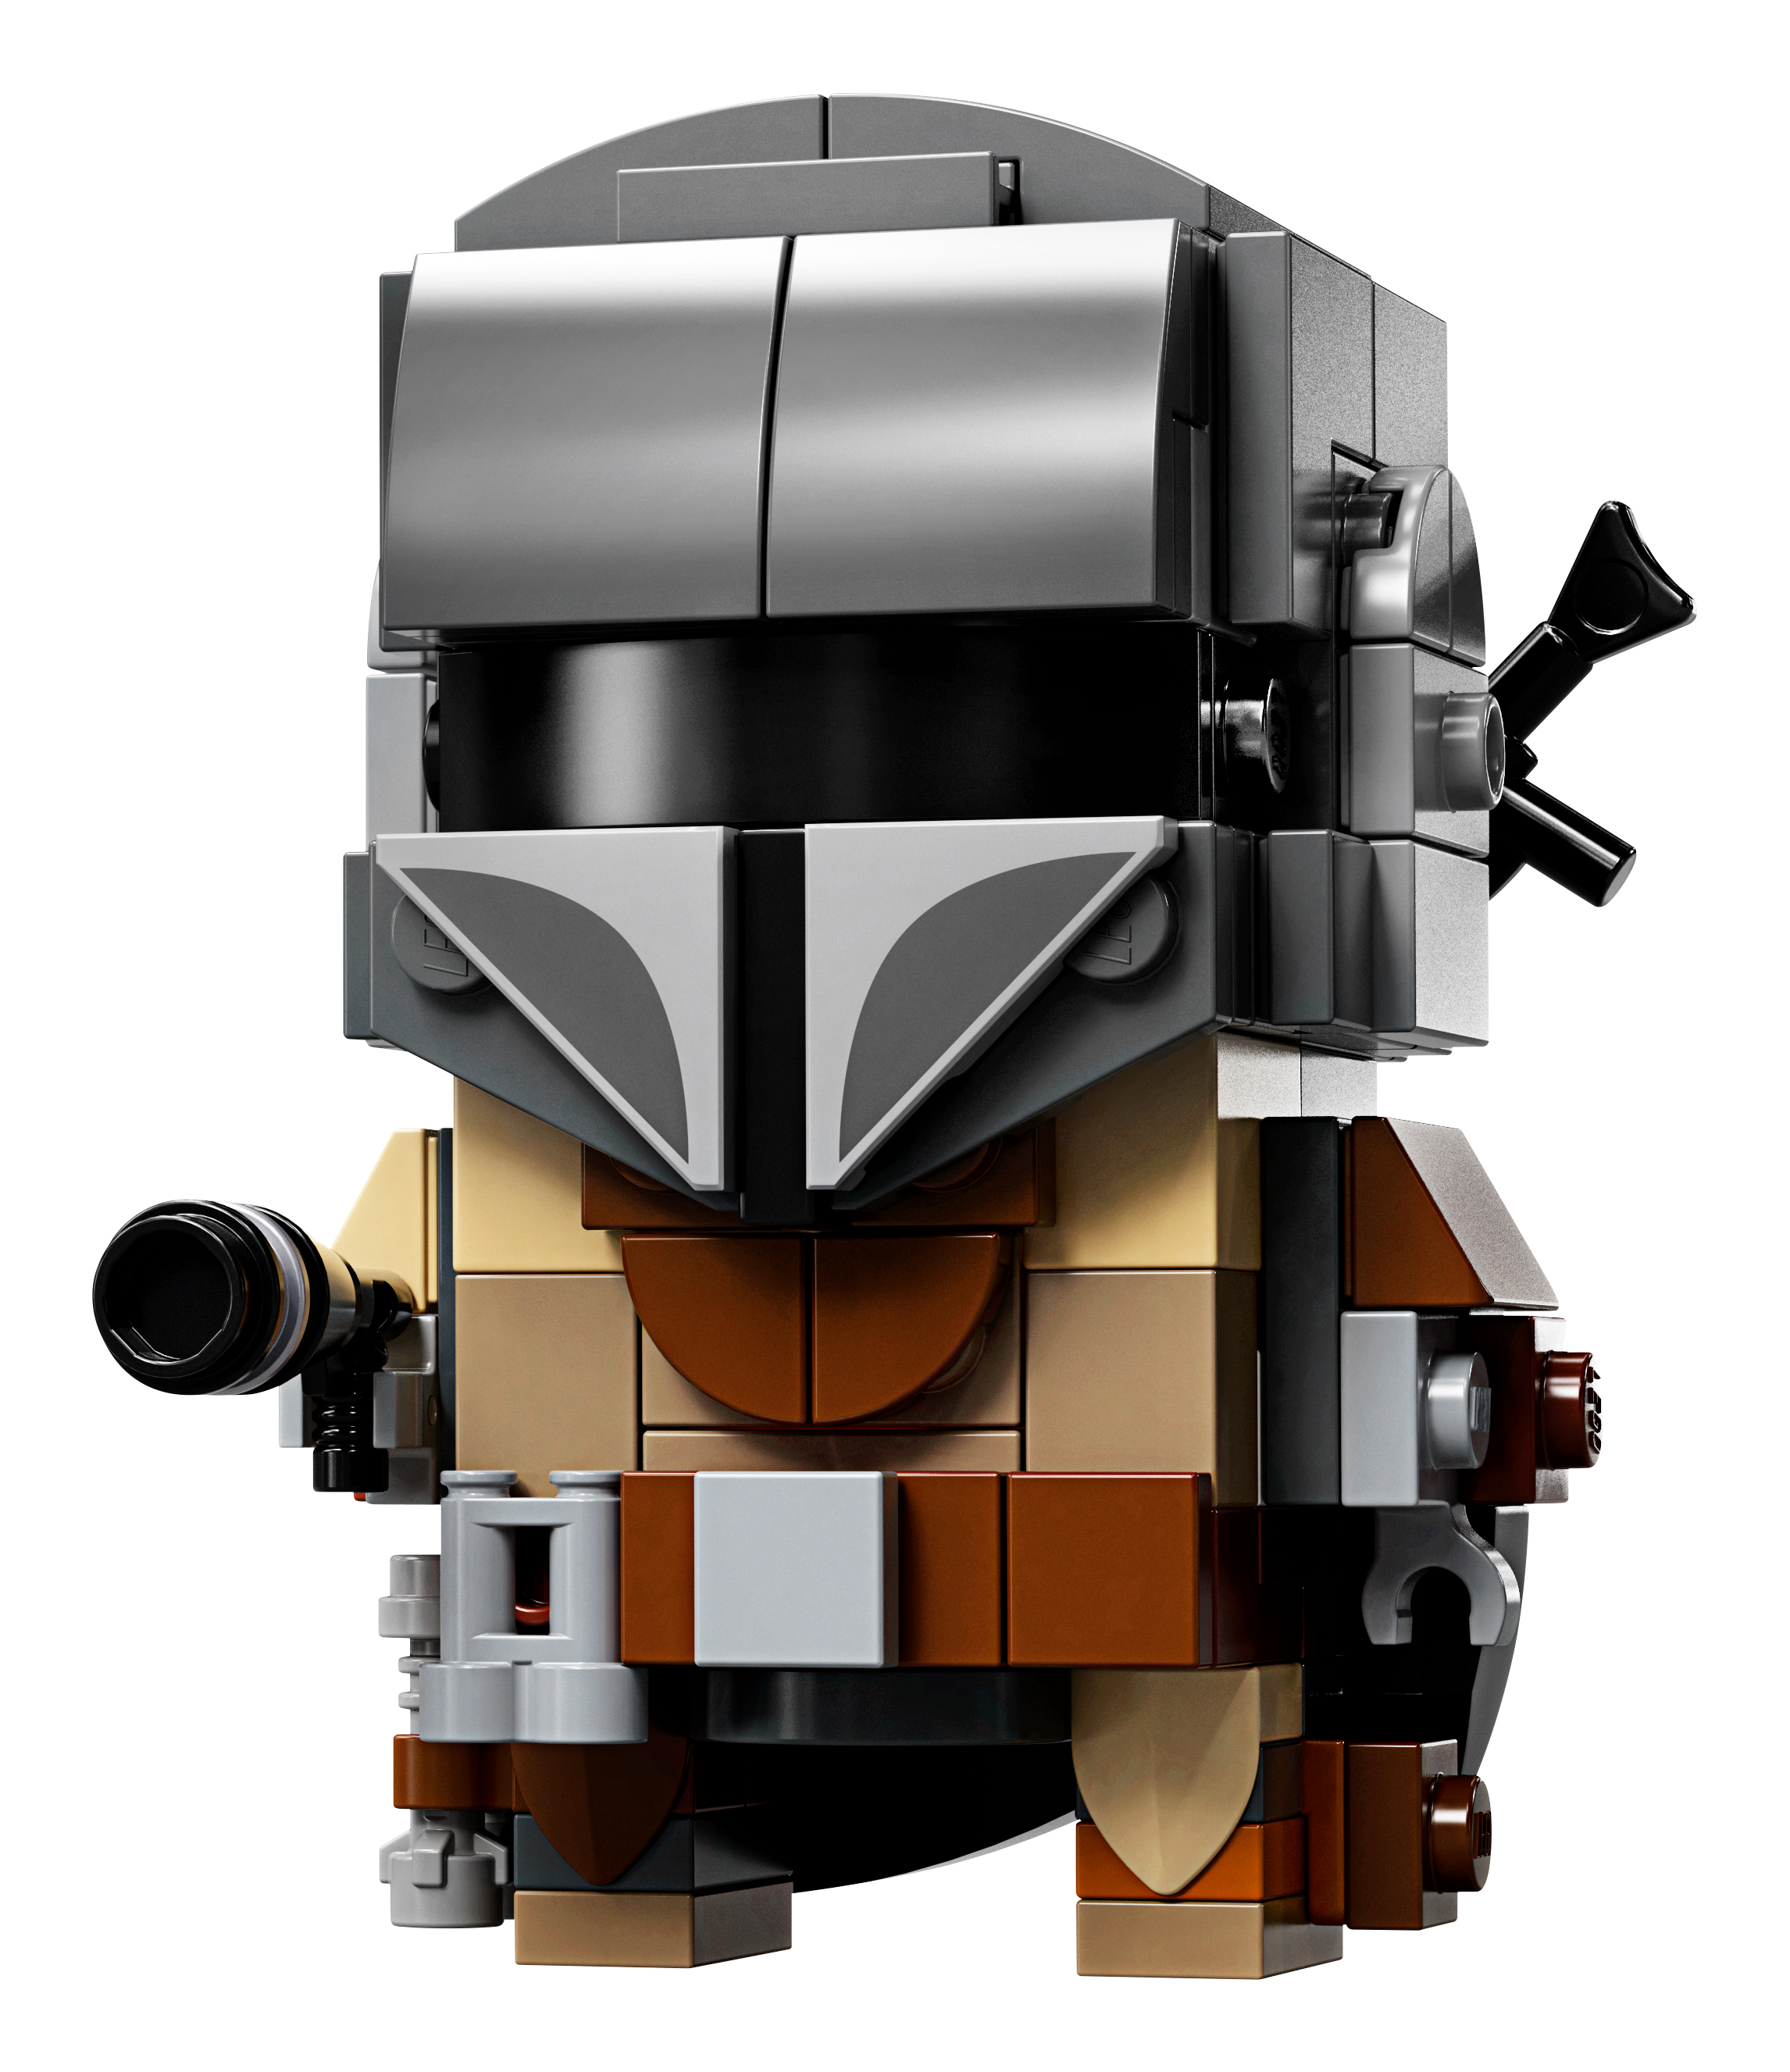 LEGO BrickHeadz Star Wars The Mandalorian & The Child 75317 'Baby Yoda'  Building Toy, Collectible Model Figures Set, Gift Idea for Teens